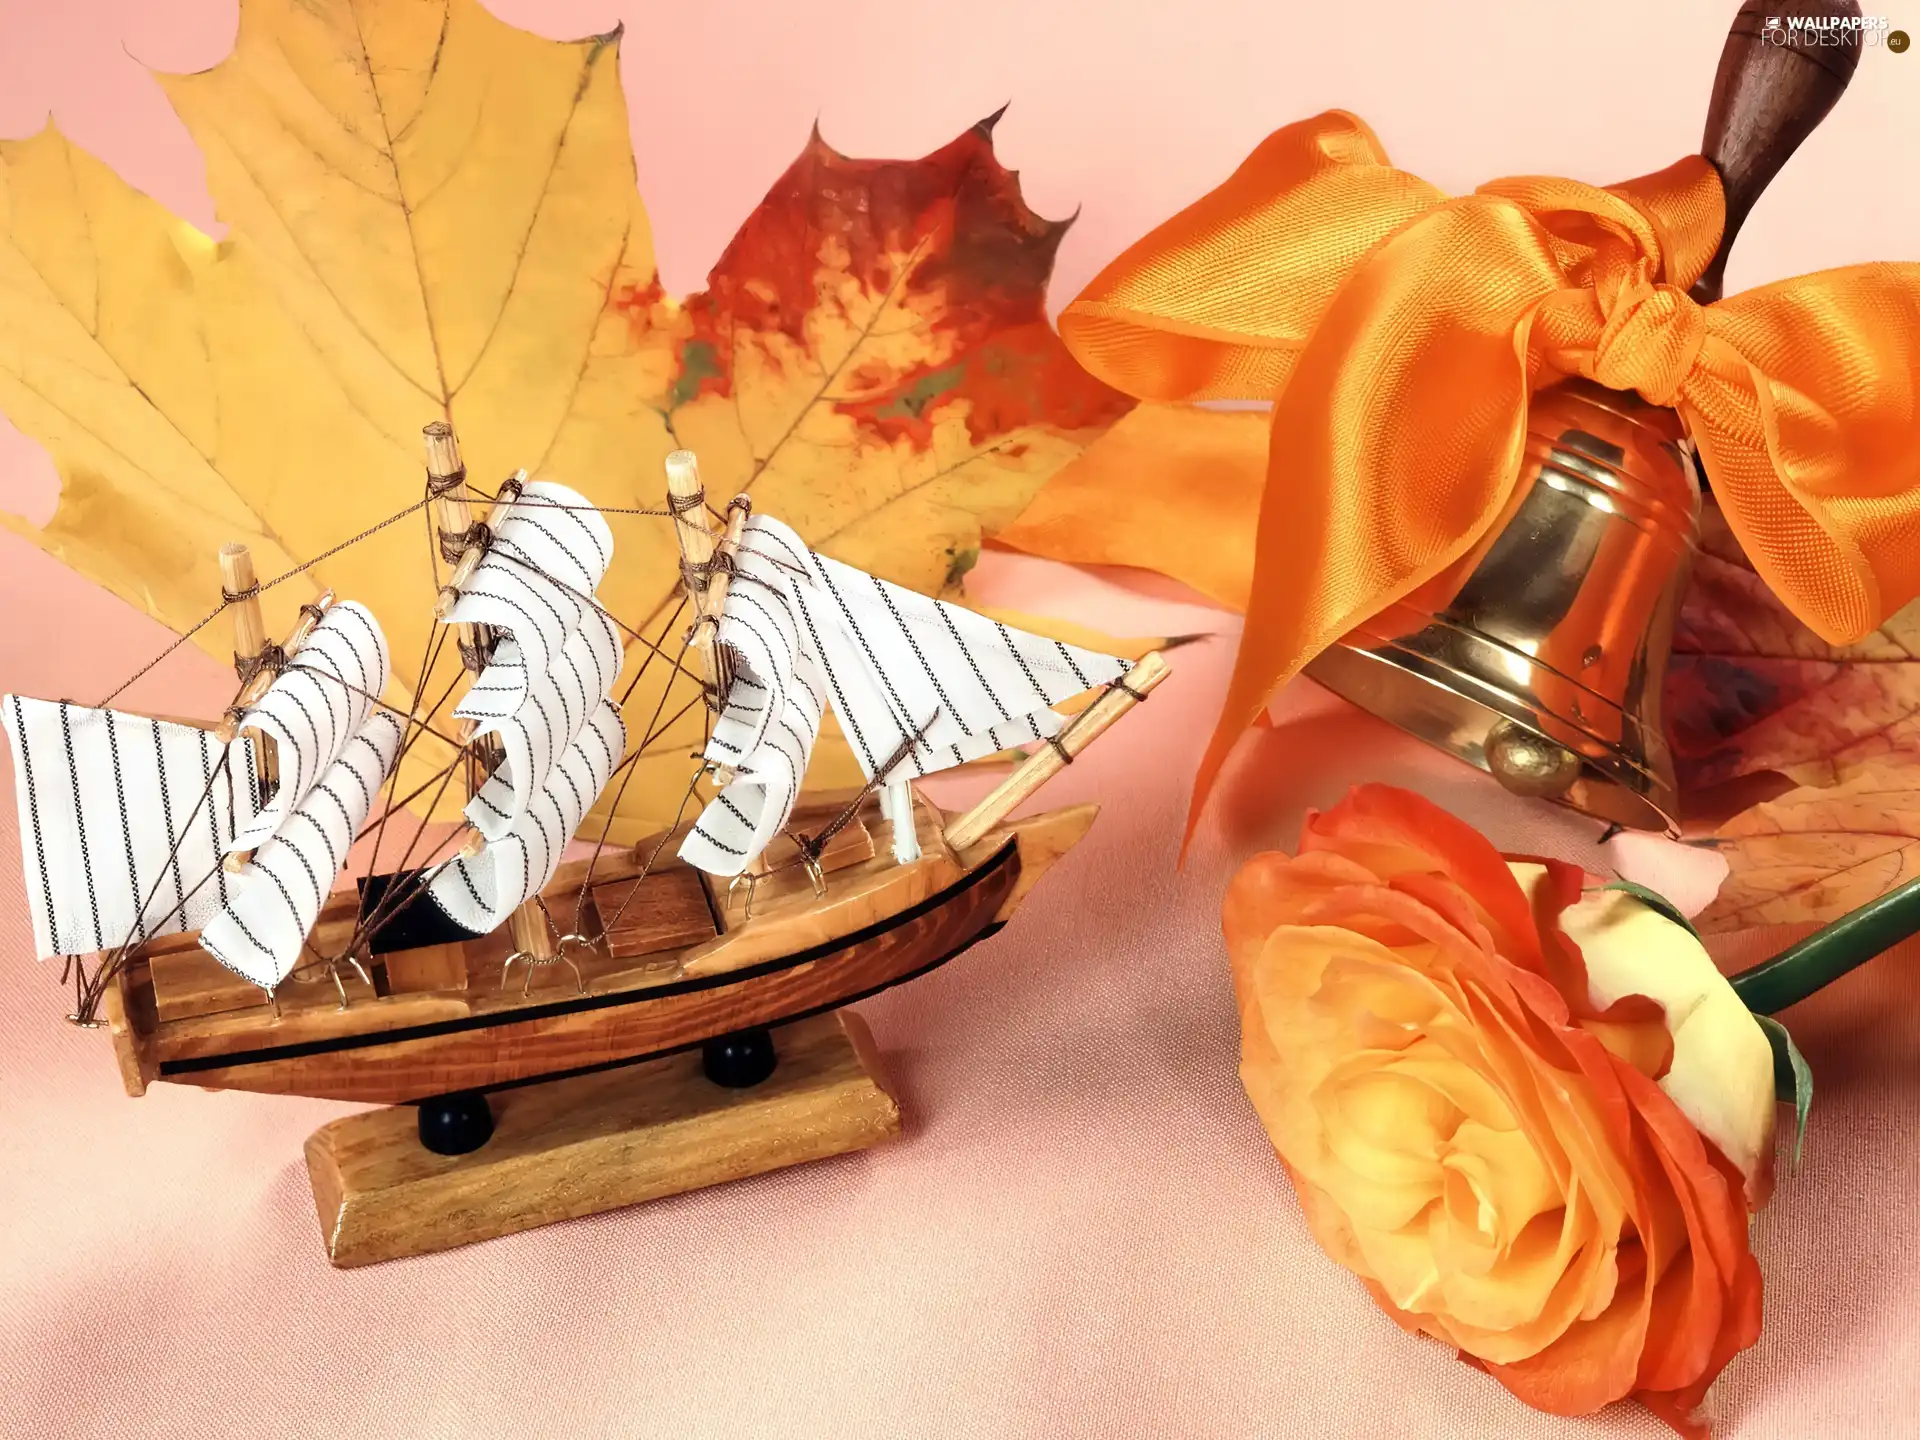 bell, decoration, sailing vessel, rose, Mini